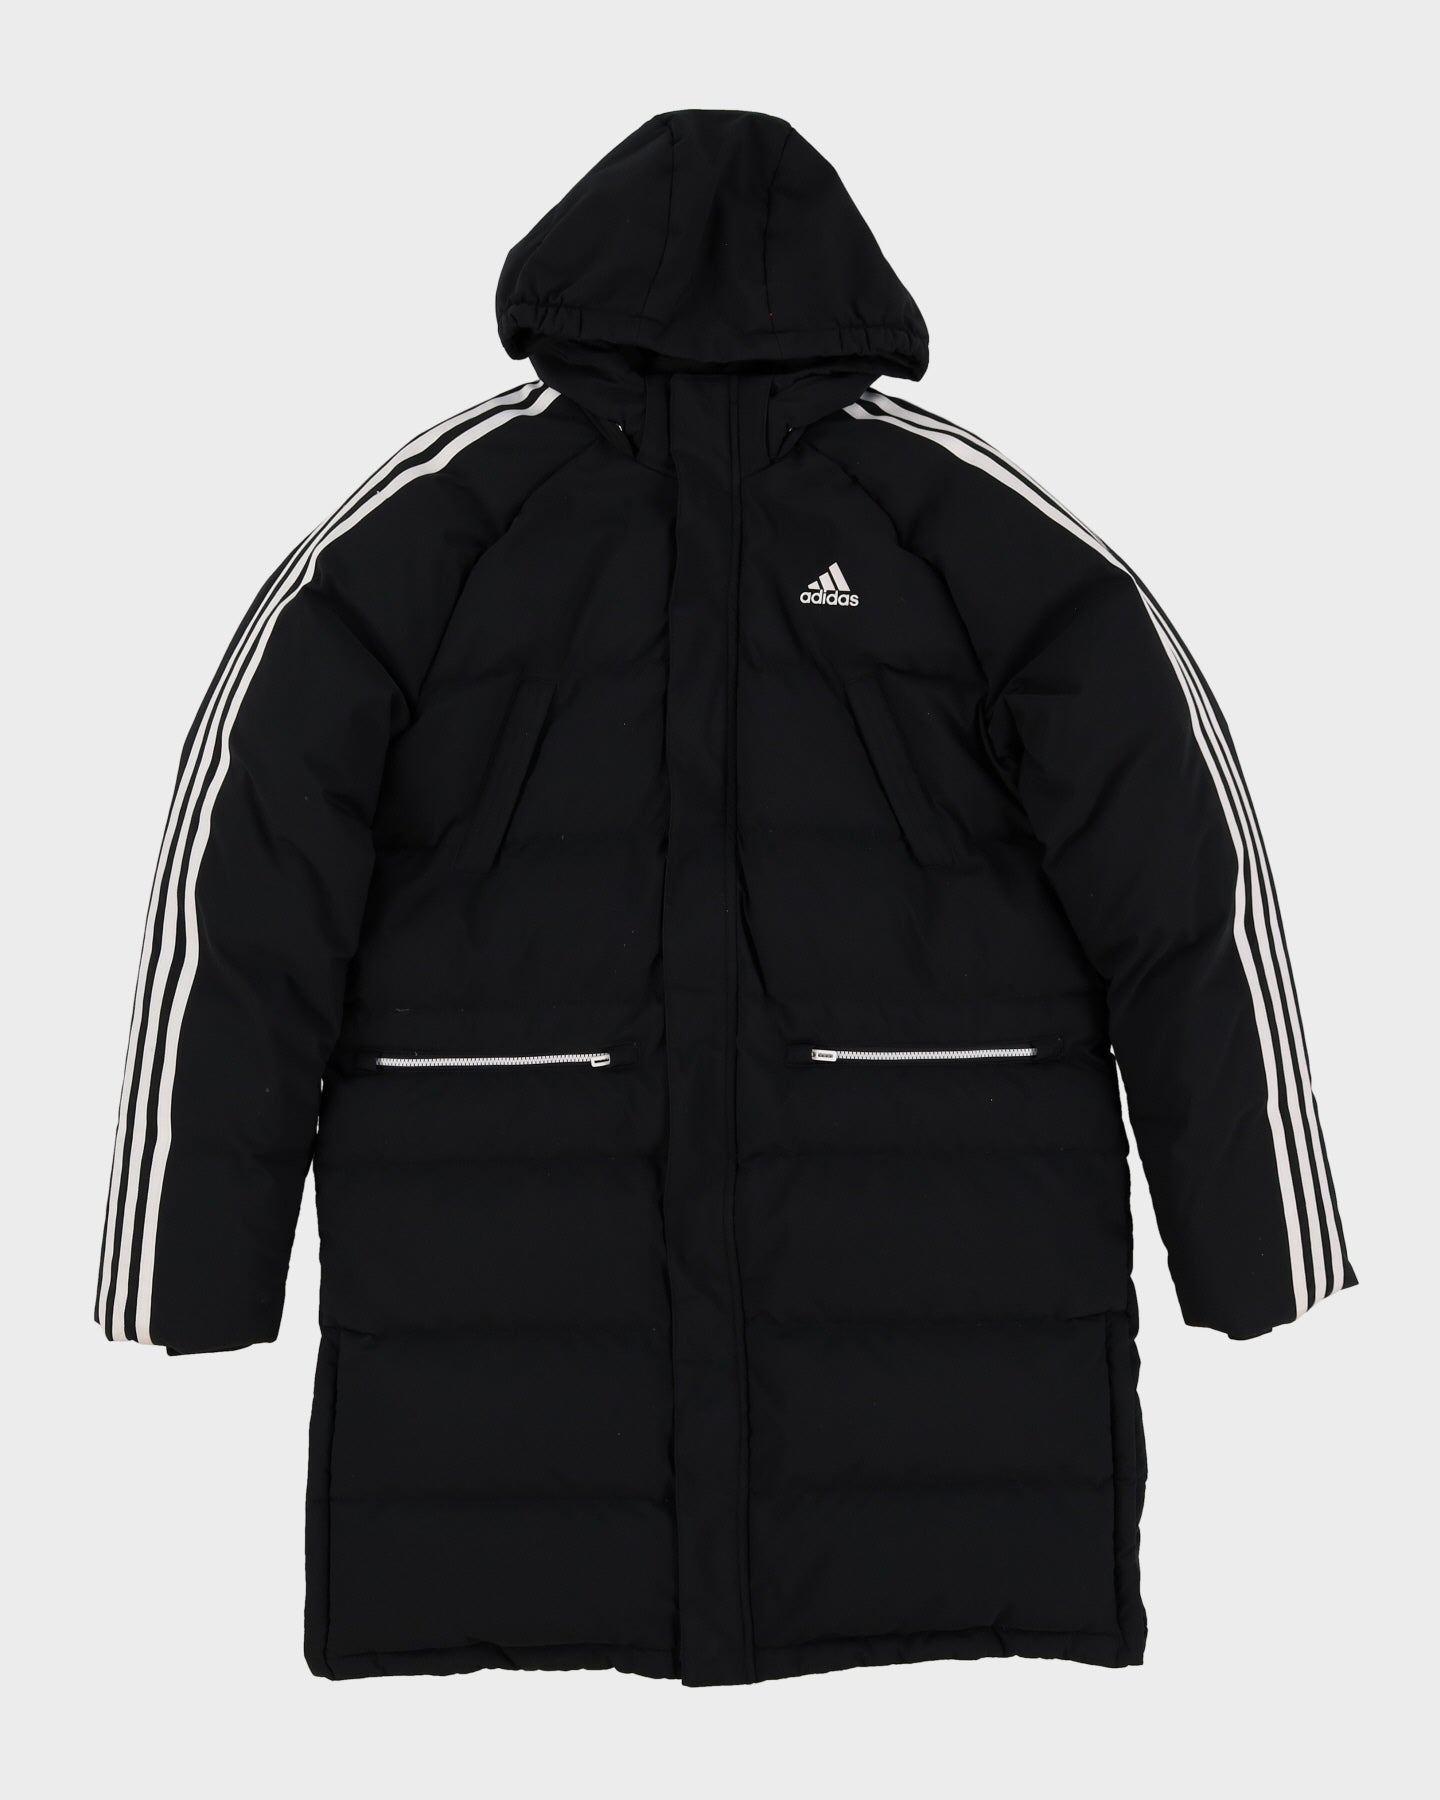 Adidas 160 Black Long Puffer Jacket - M